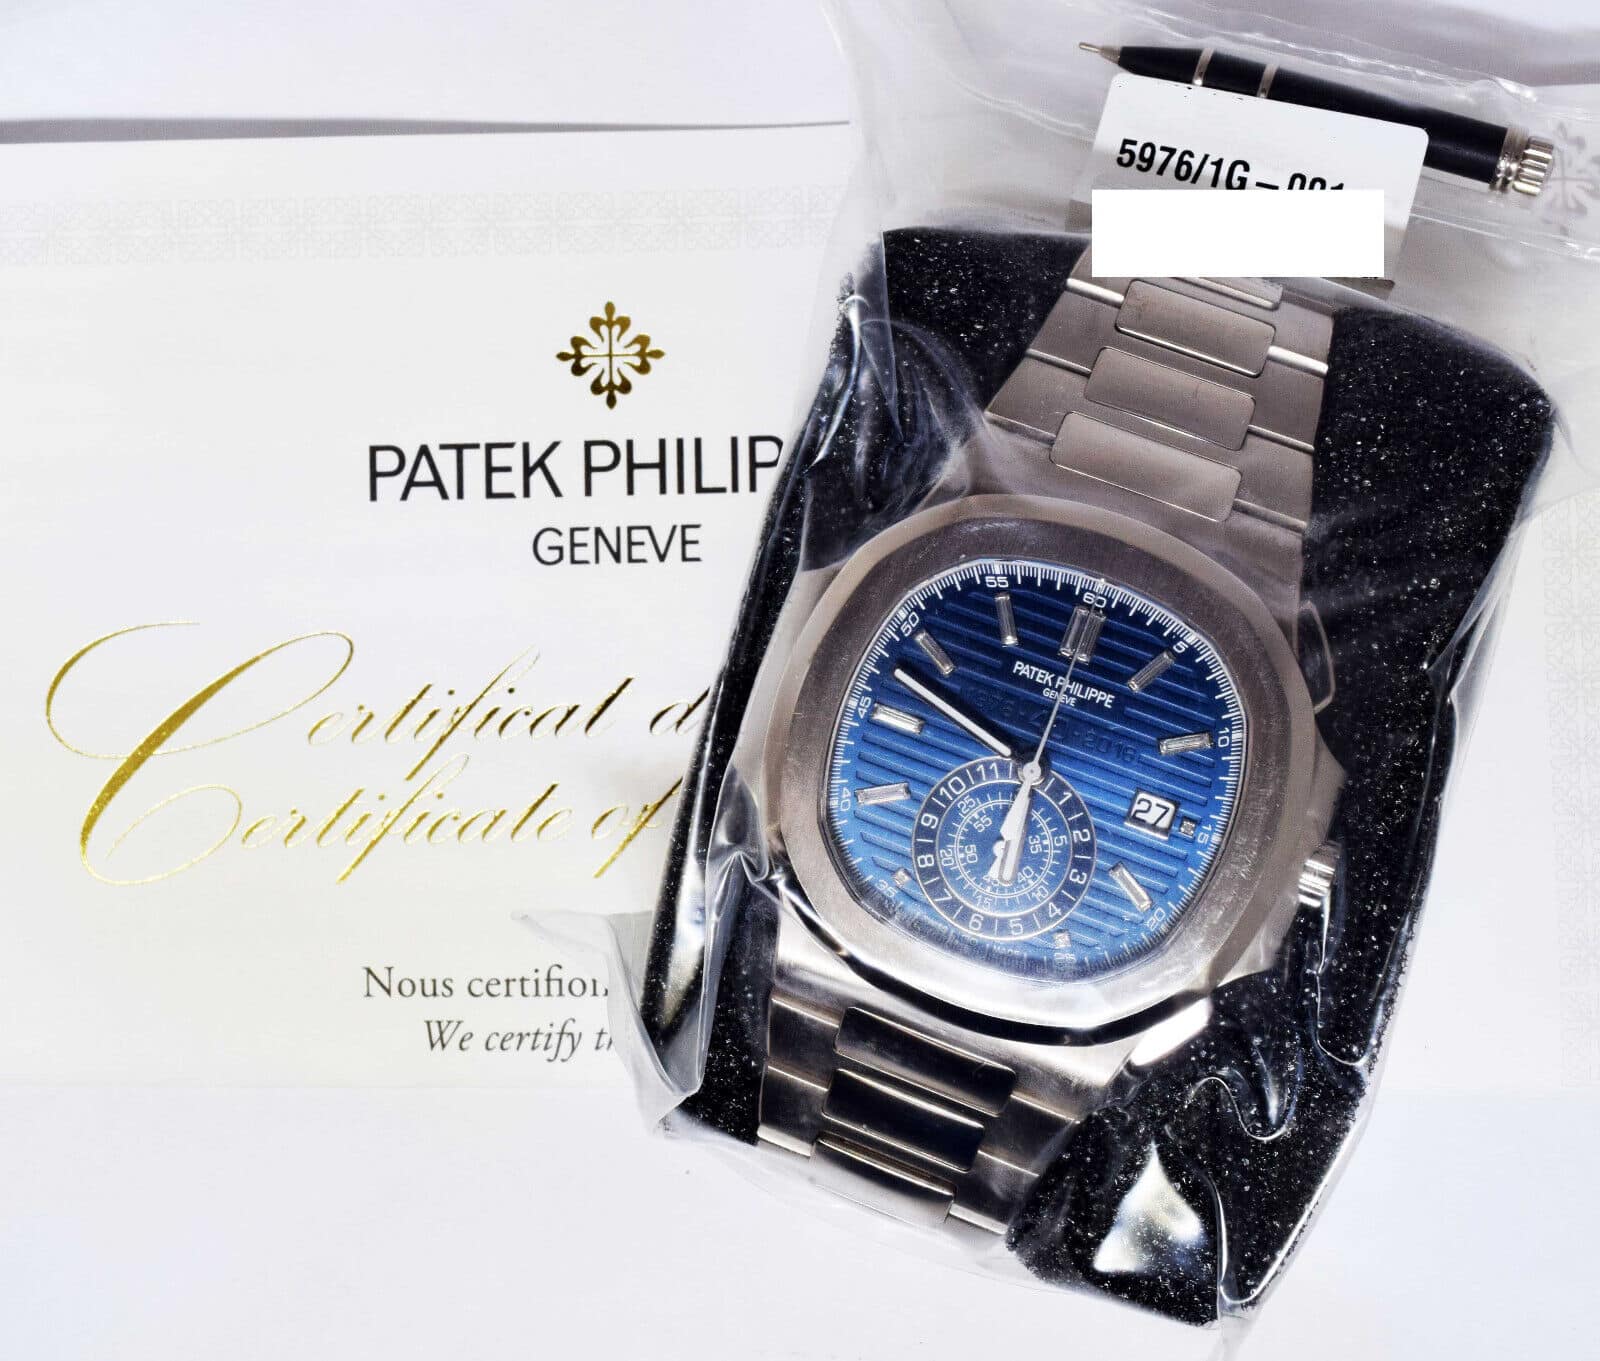 Patek Philippe Nautilus 5976/1G-001, 18K White Gold, Blue Index Dial 44 mm